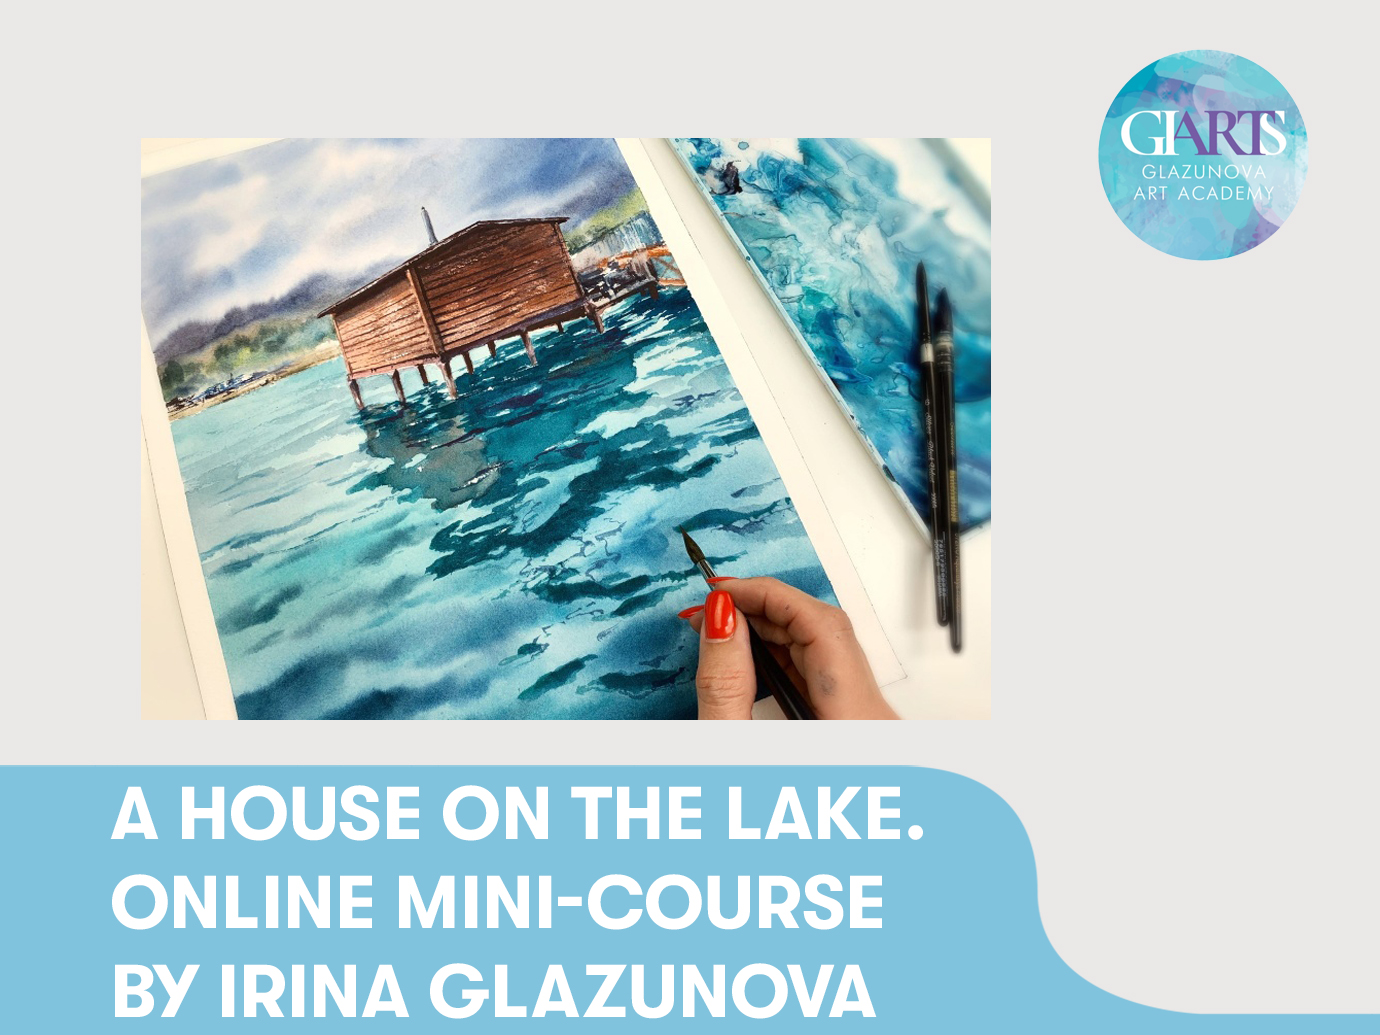 A house on the lake. Online mini-course by Irina Glazunova